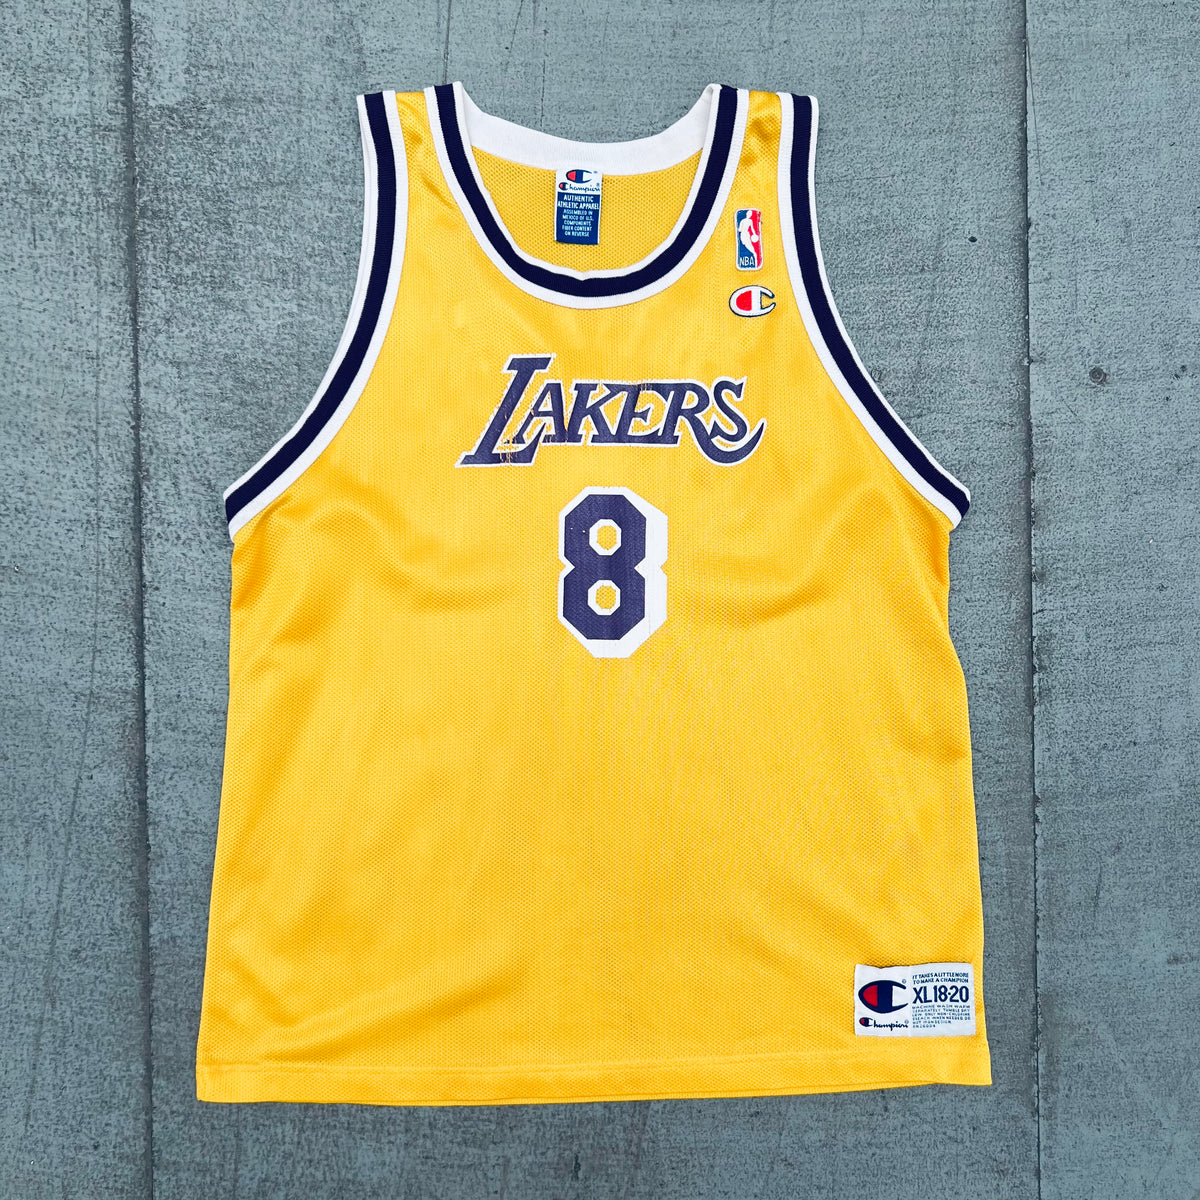 Kobe Bryant 1996-97 Rookie Year Jersey Los Angeles Lakers NBA - Rare  Basketball Jerseys